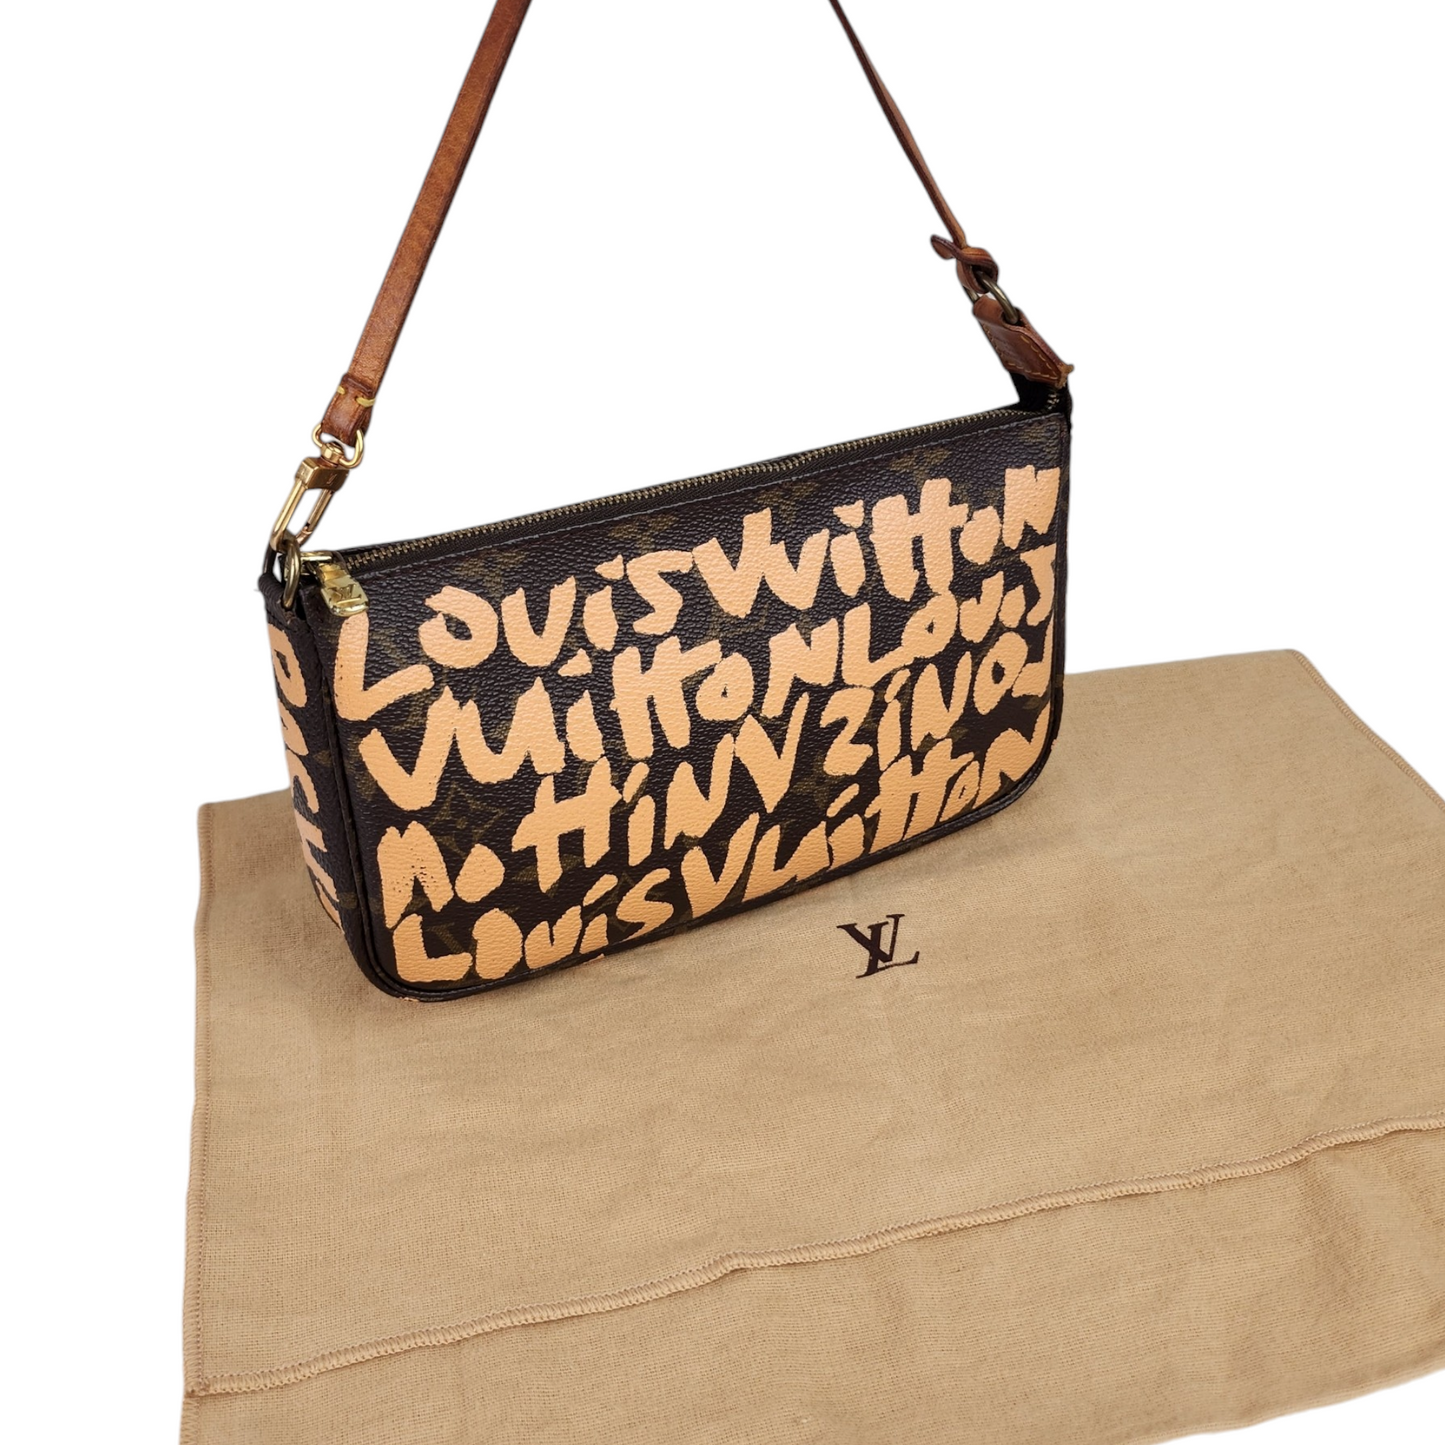 Louis Vuitton Limited Edition Stephen Sprouse Graffiti Pochette Bag